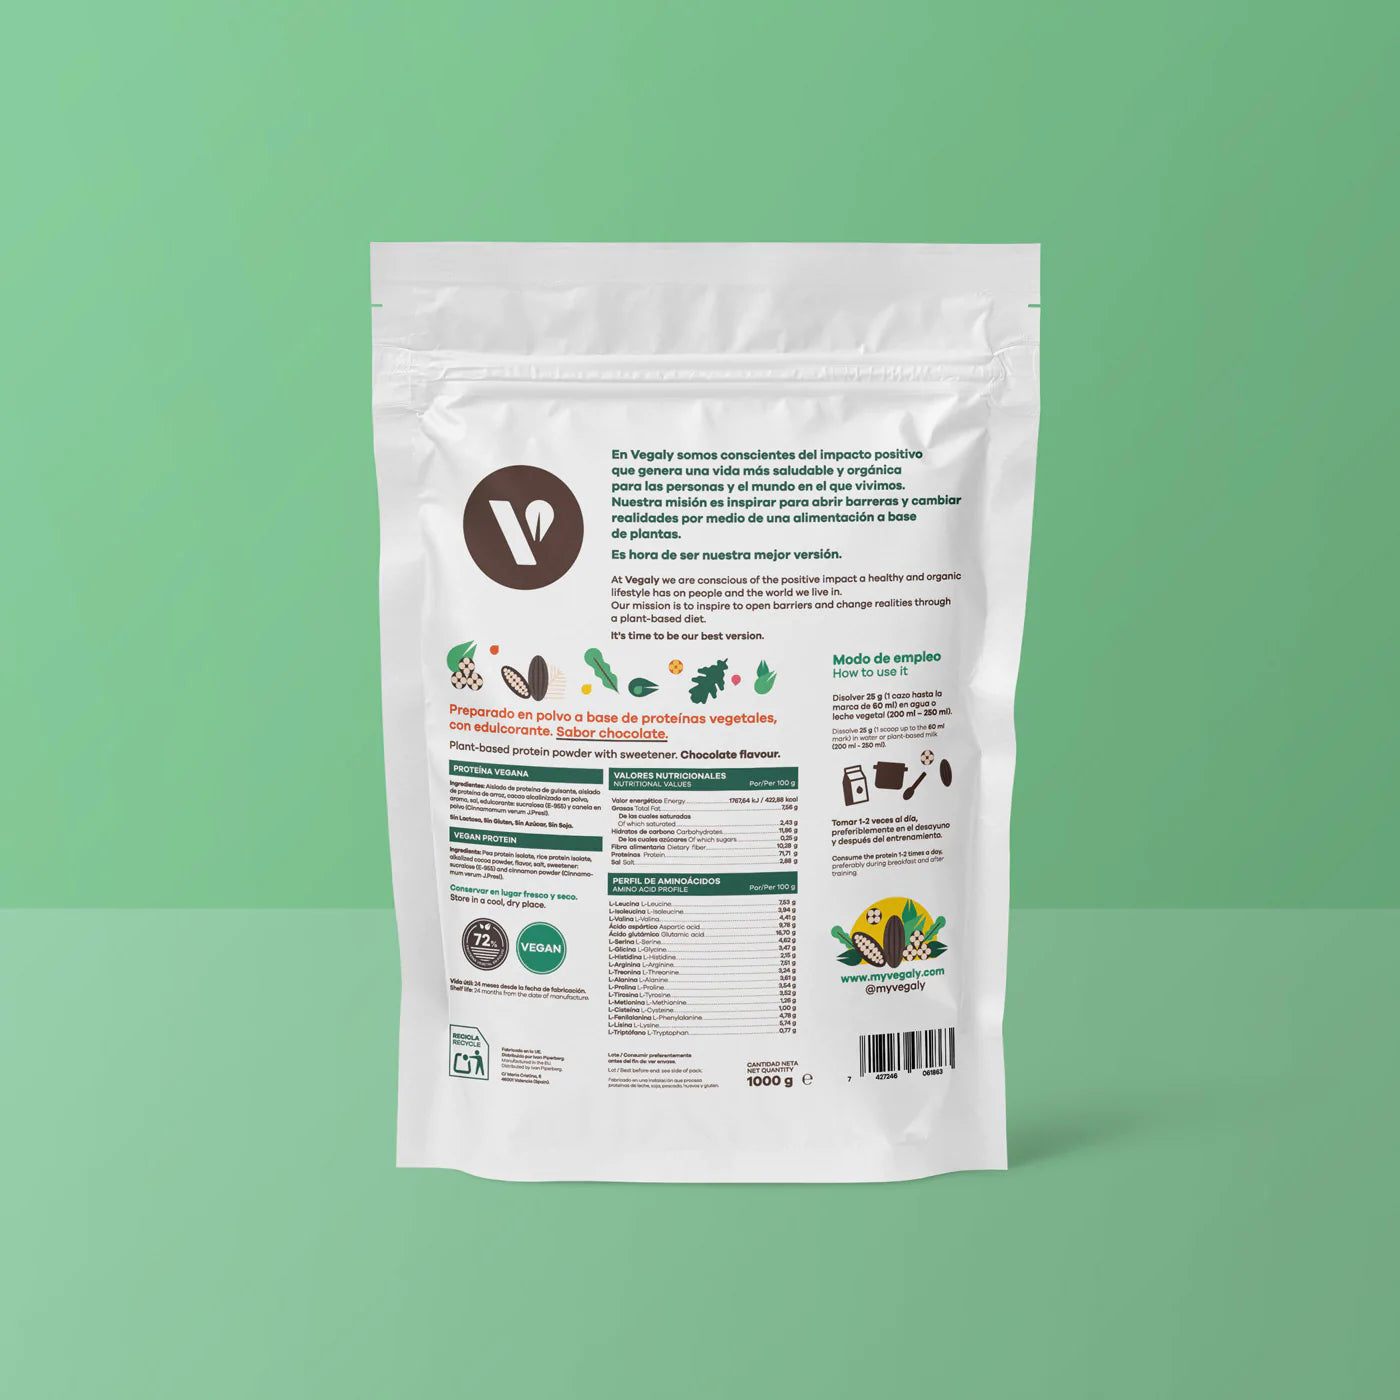 Veganes Protein Schokolade 1kg by Vegaly